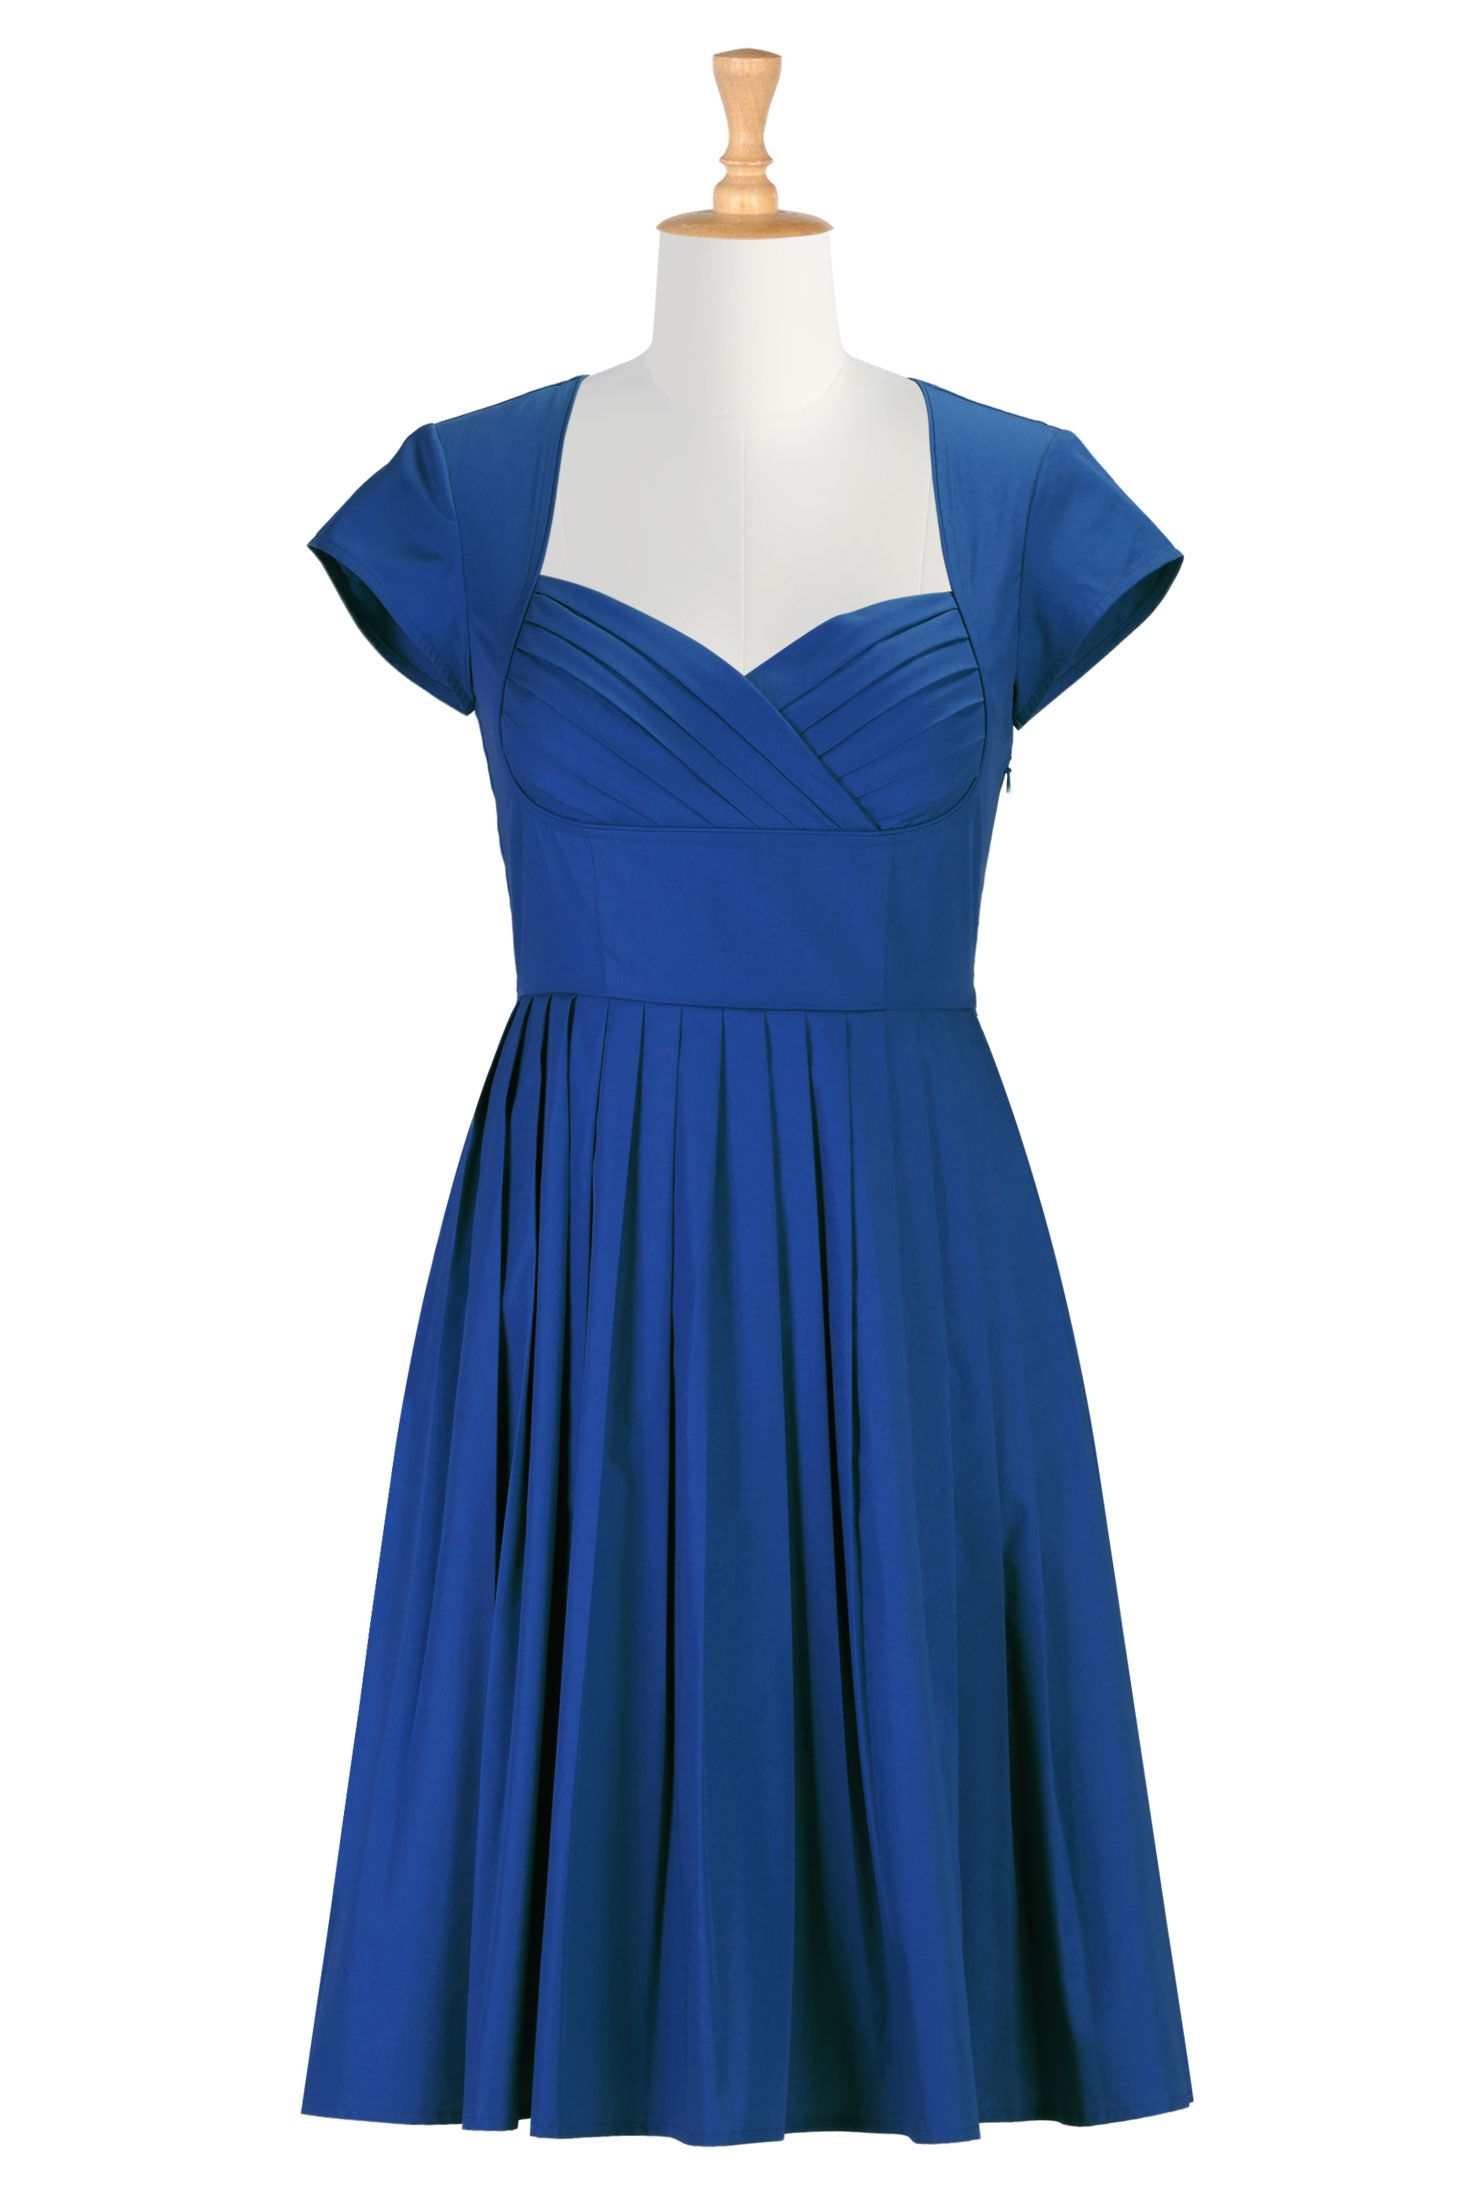 Royal Blue Dress , Plus Size Evening Dress Shop womens designer cloth